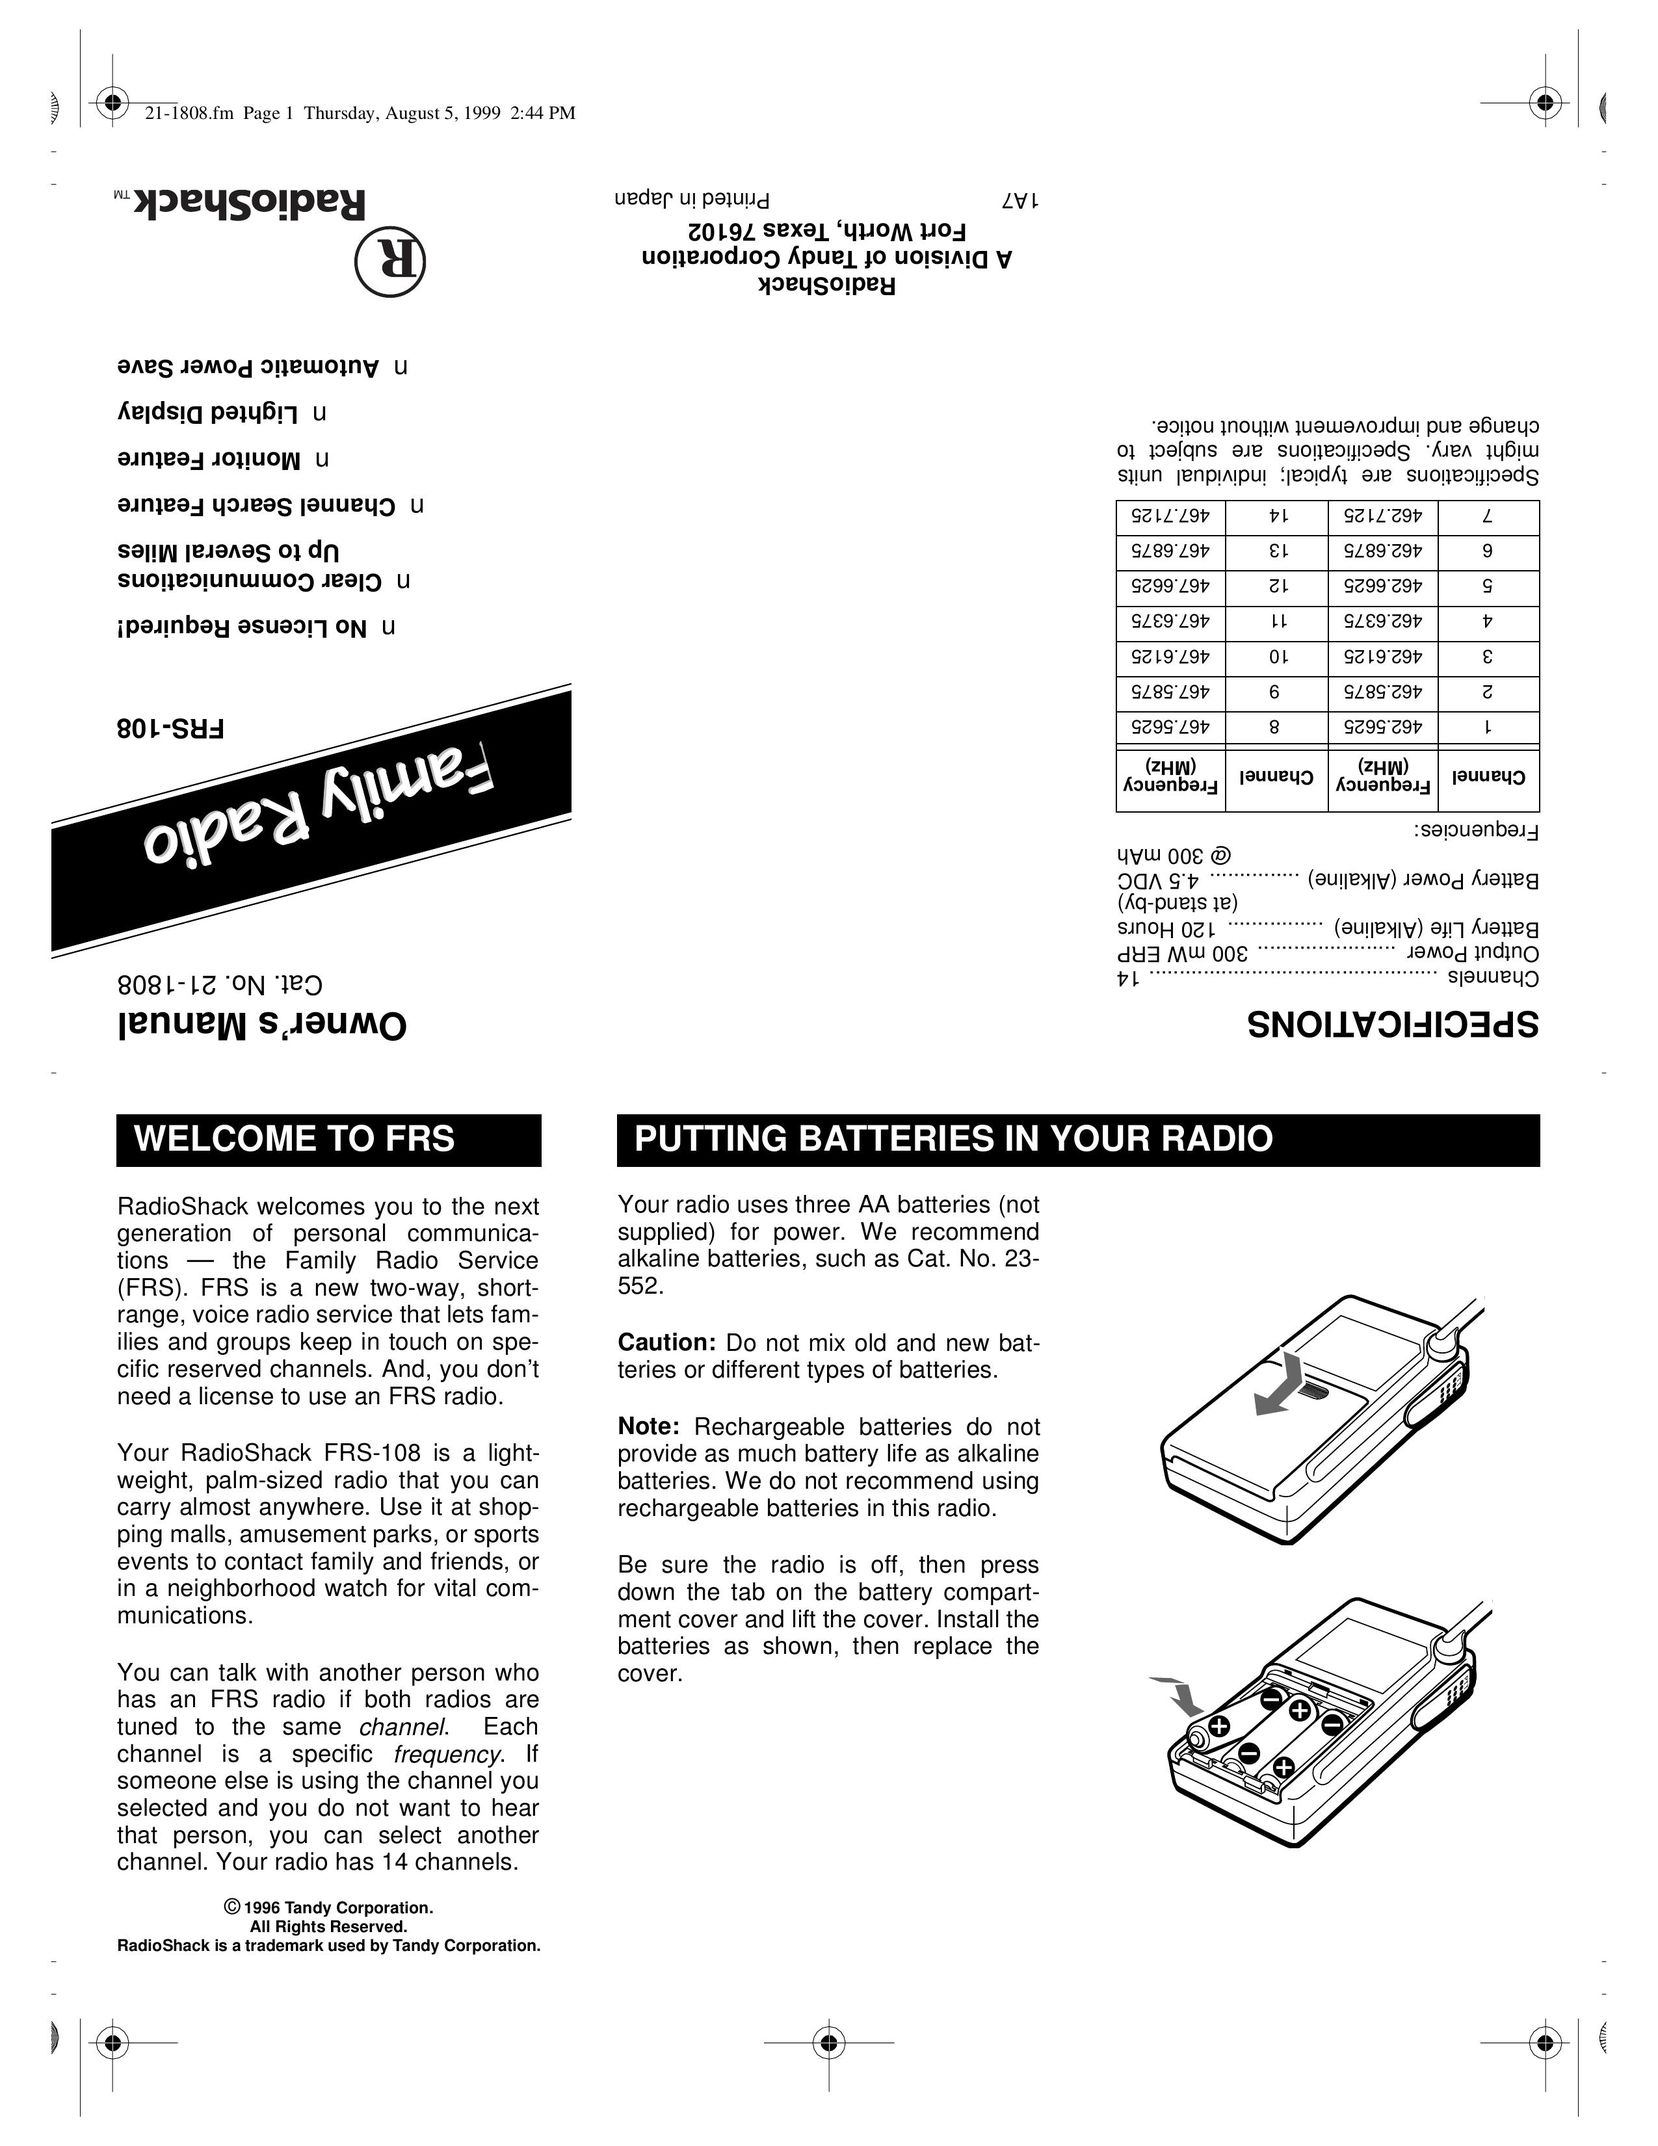 Radio Shack FRS-108 Two-Way Radio User Manual